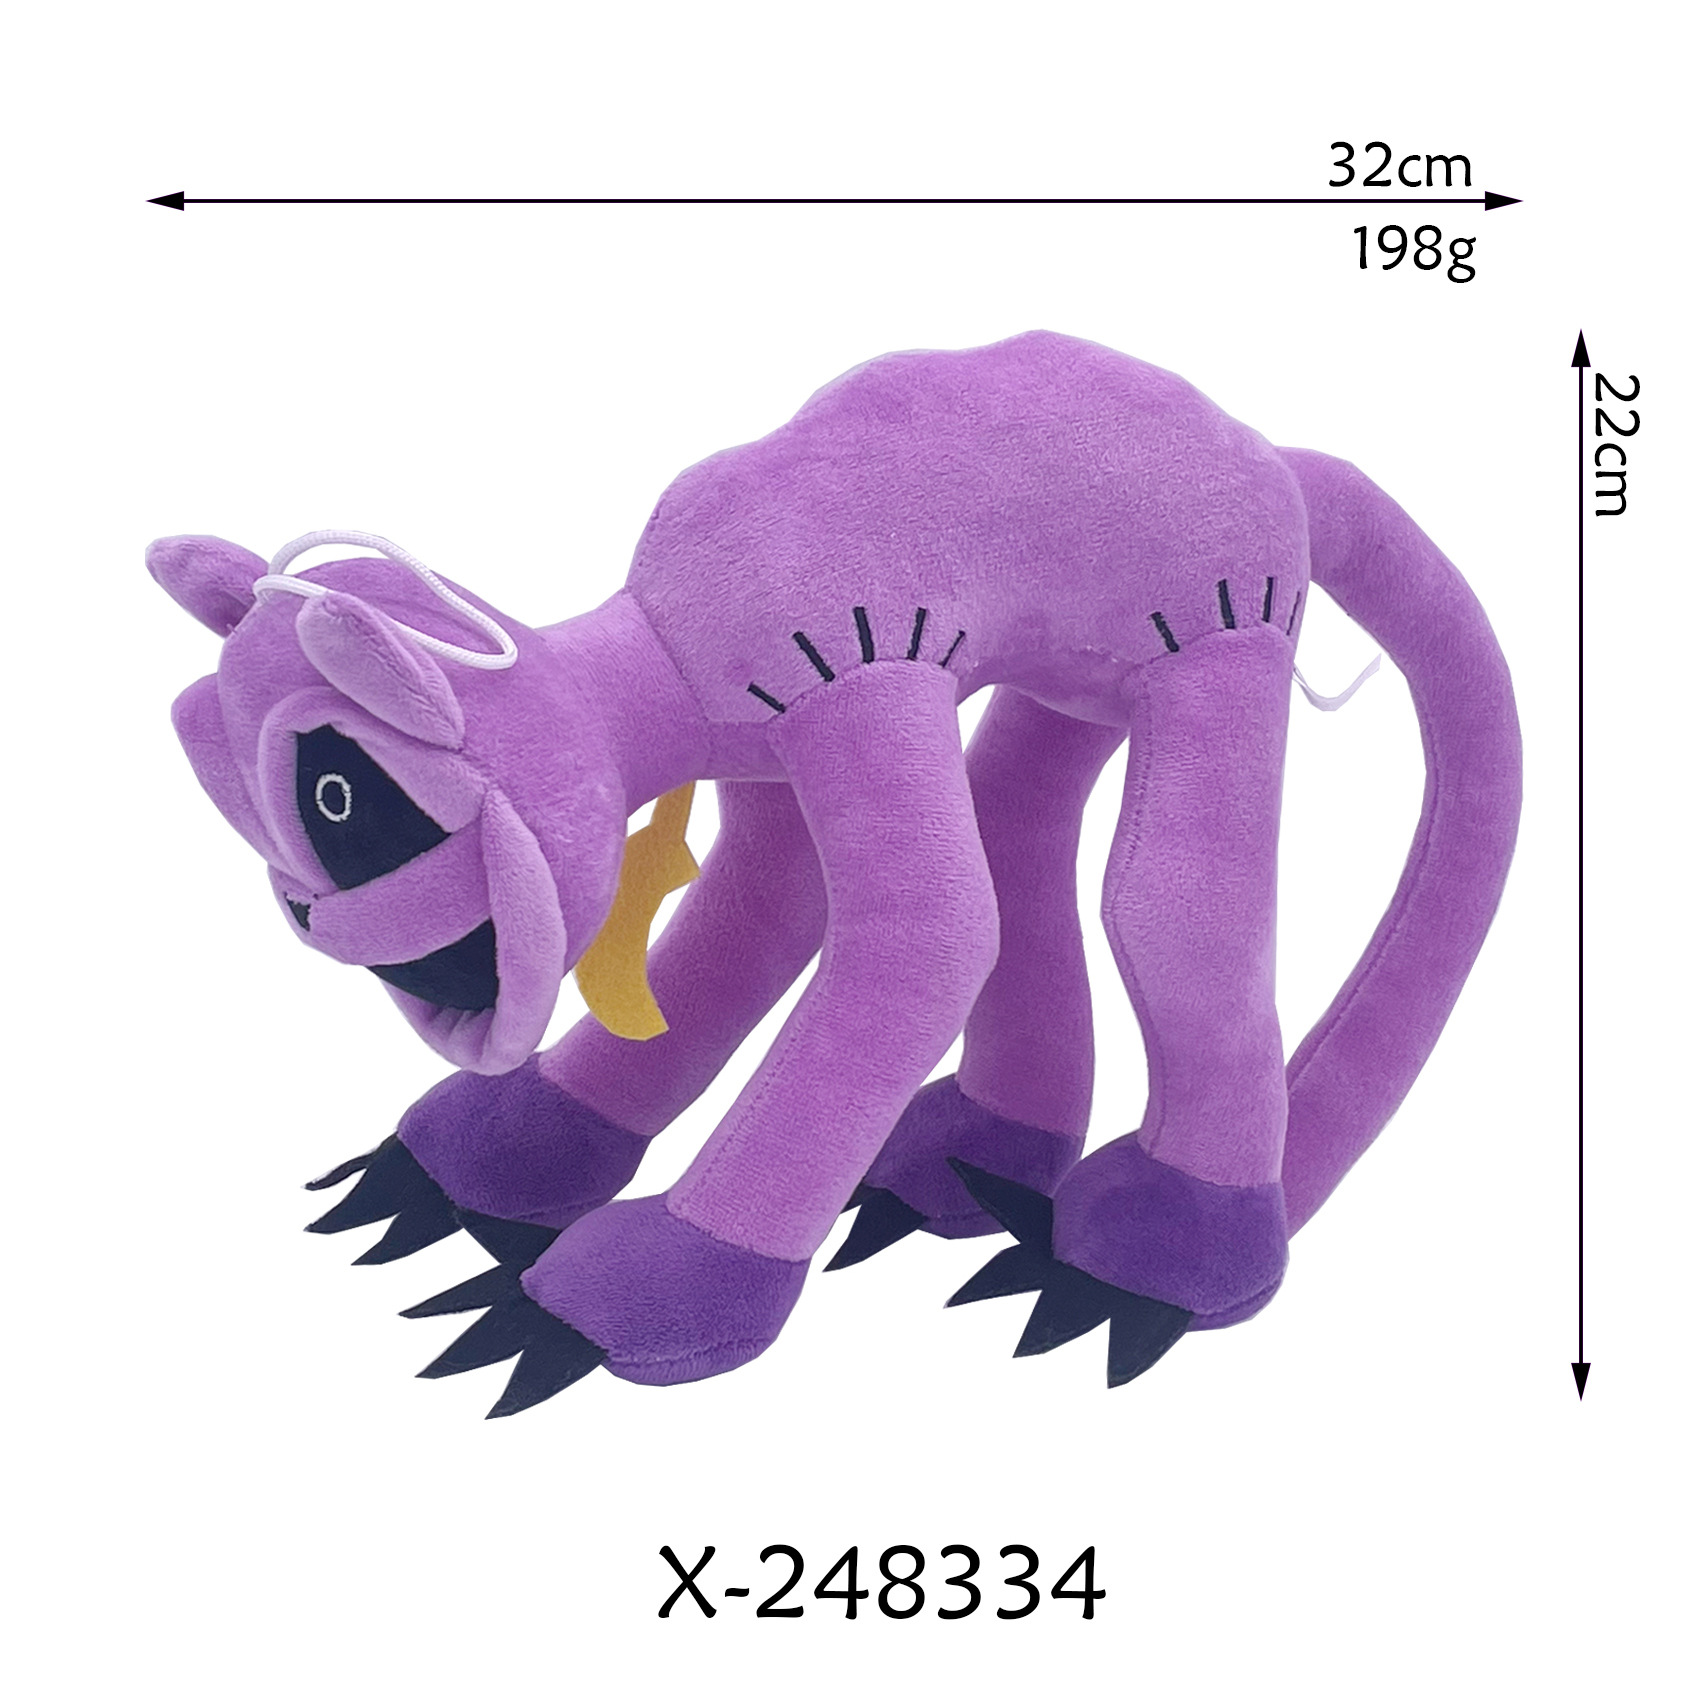 Bobby poppy playtime mutant purple cat smiling critters doll plush toy spot